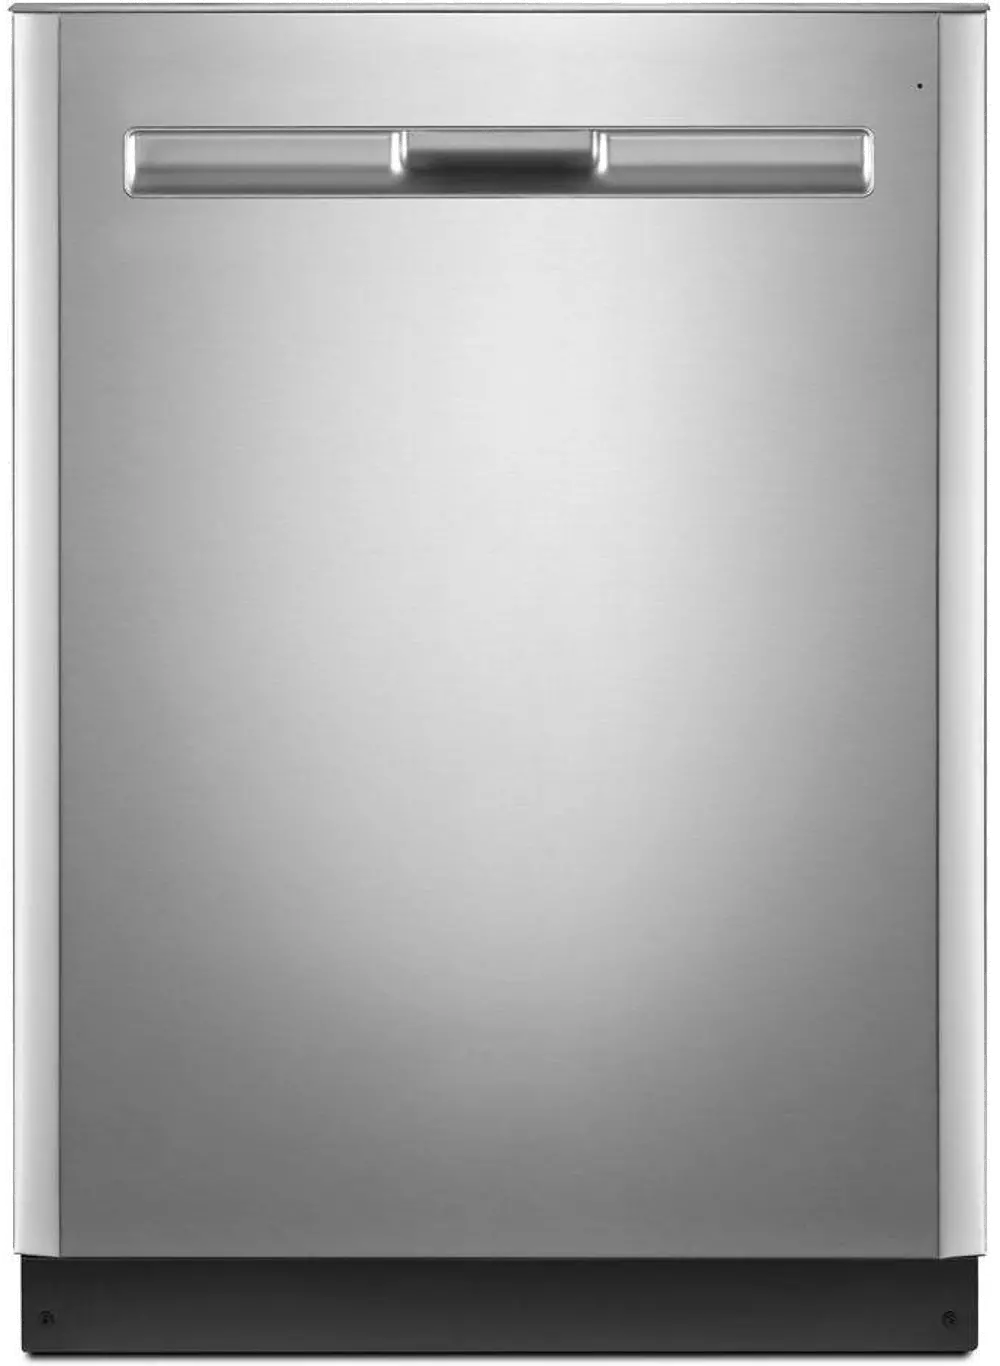 MDB8959SFZ Maytag Dishwasher - Stainless Steel-1